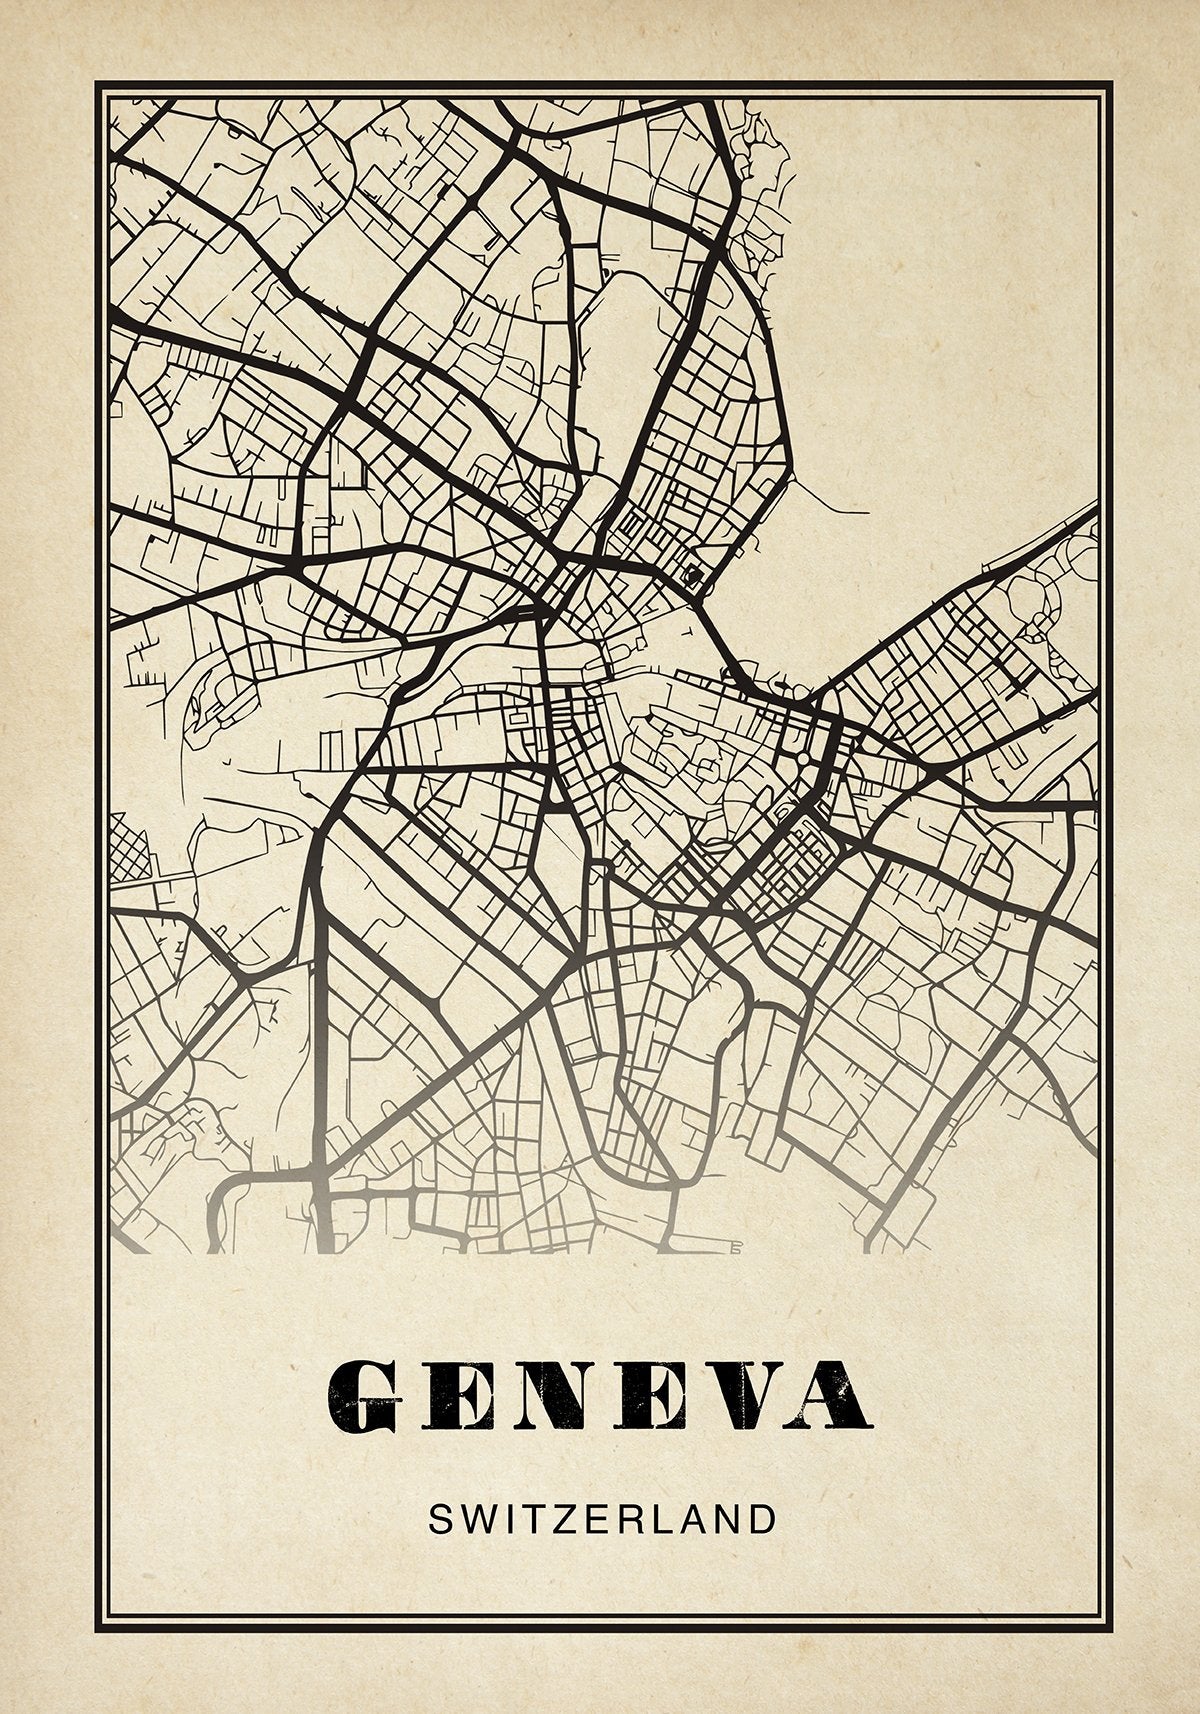 Geneva City Map Sepia Poster